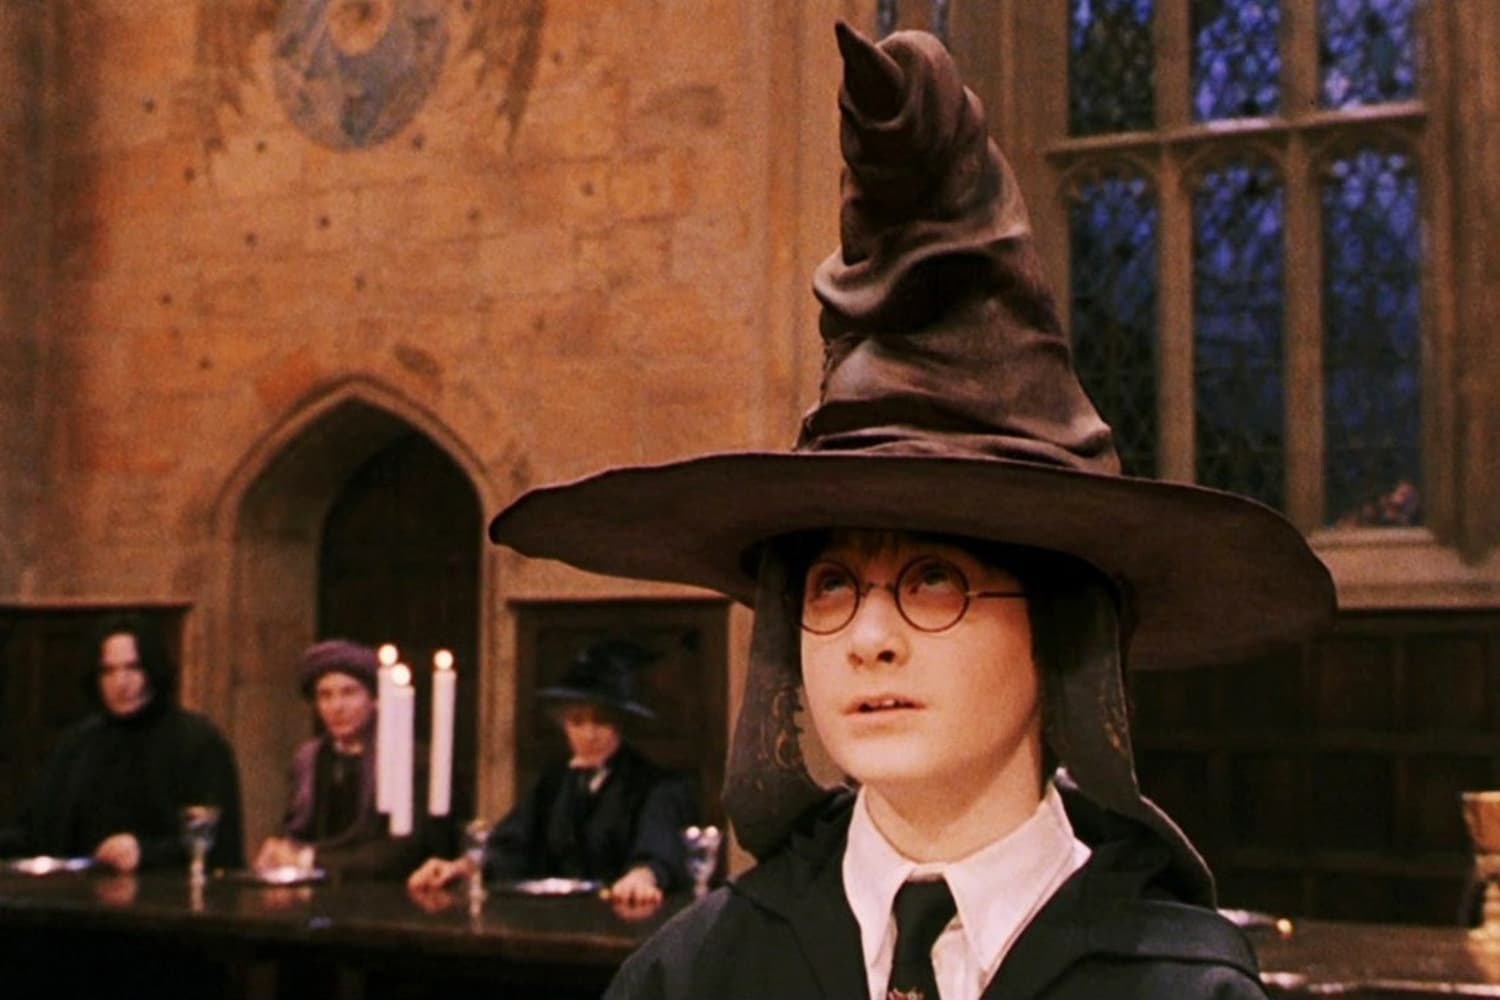 Harry Potter Outfits: Hogwarts House Looks Based On TikTok Aesthetics